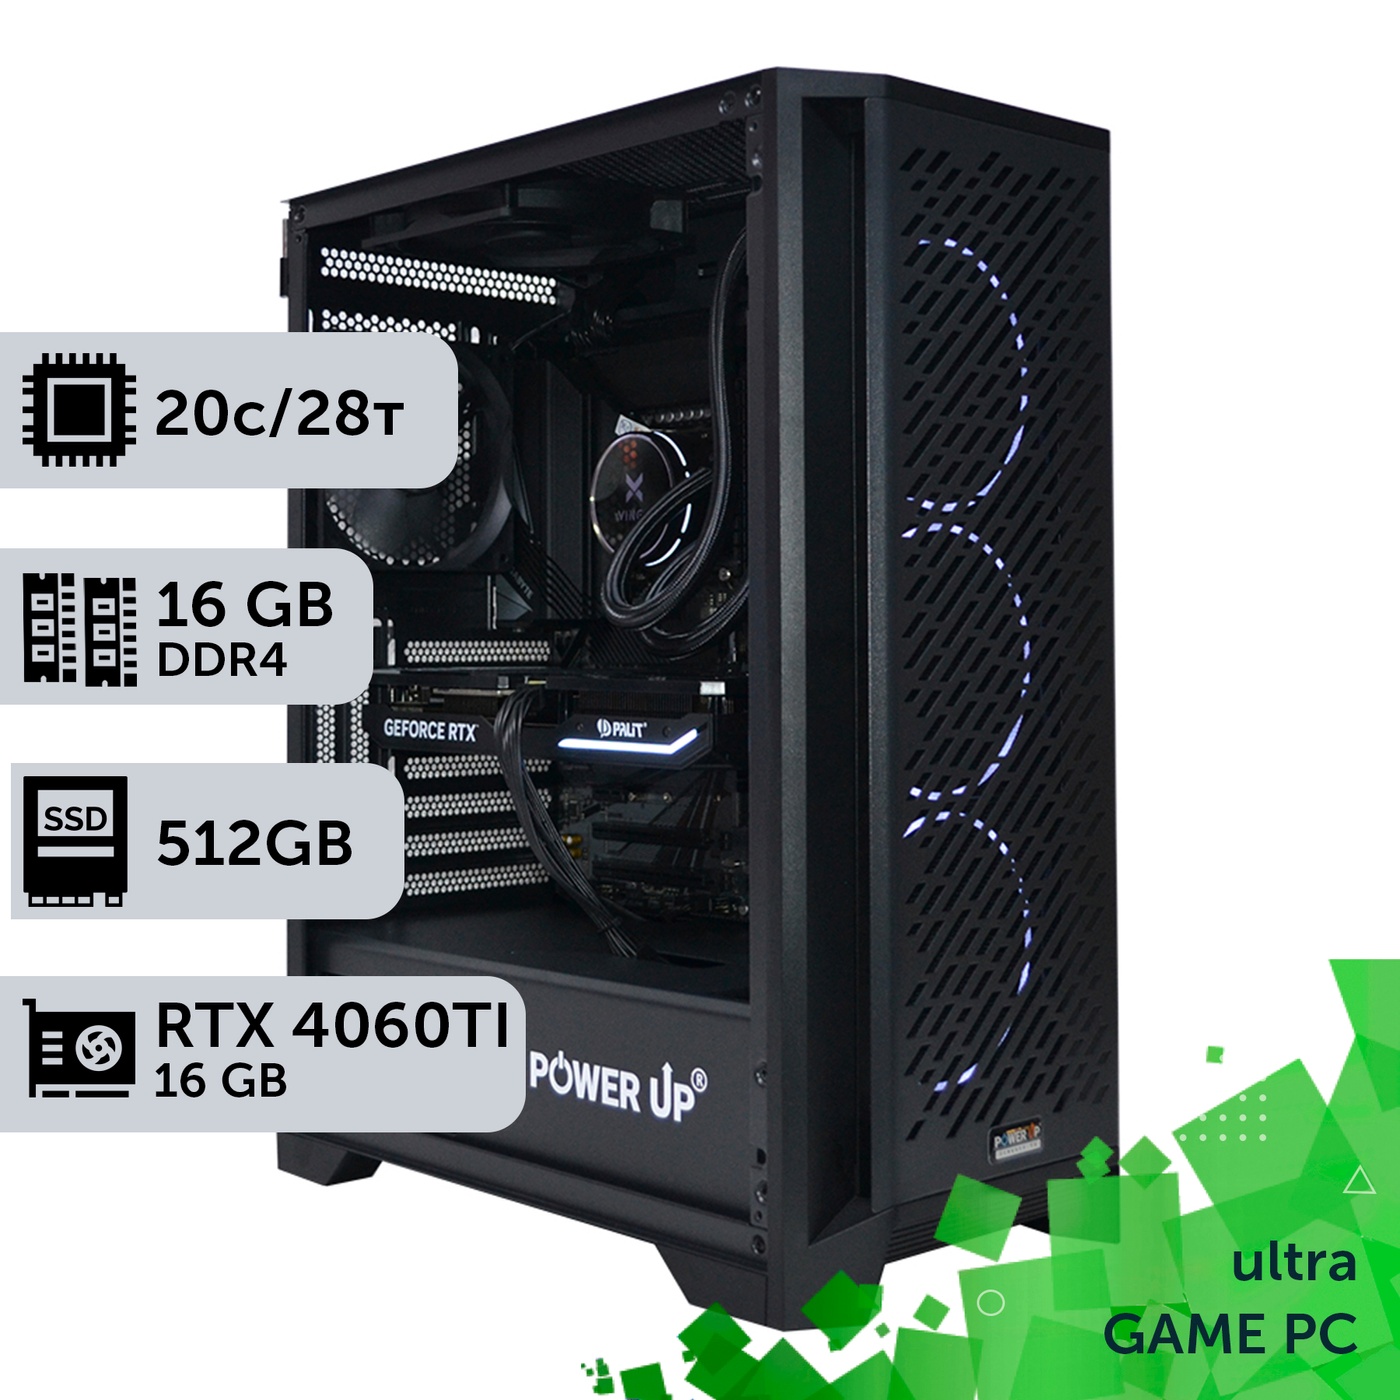 Игровой компьютер GamePC Ultra #257 Core i7 14700K/16 GB/HDD 1 TB/SSD 512GB/GeForce RTX 4060Ti 16GB